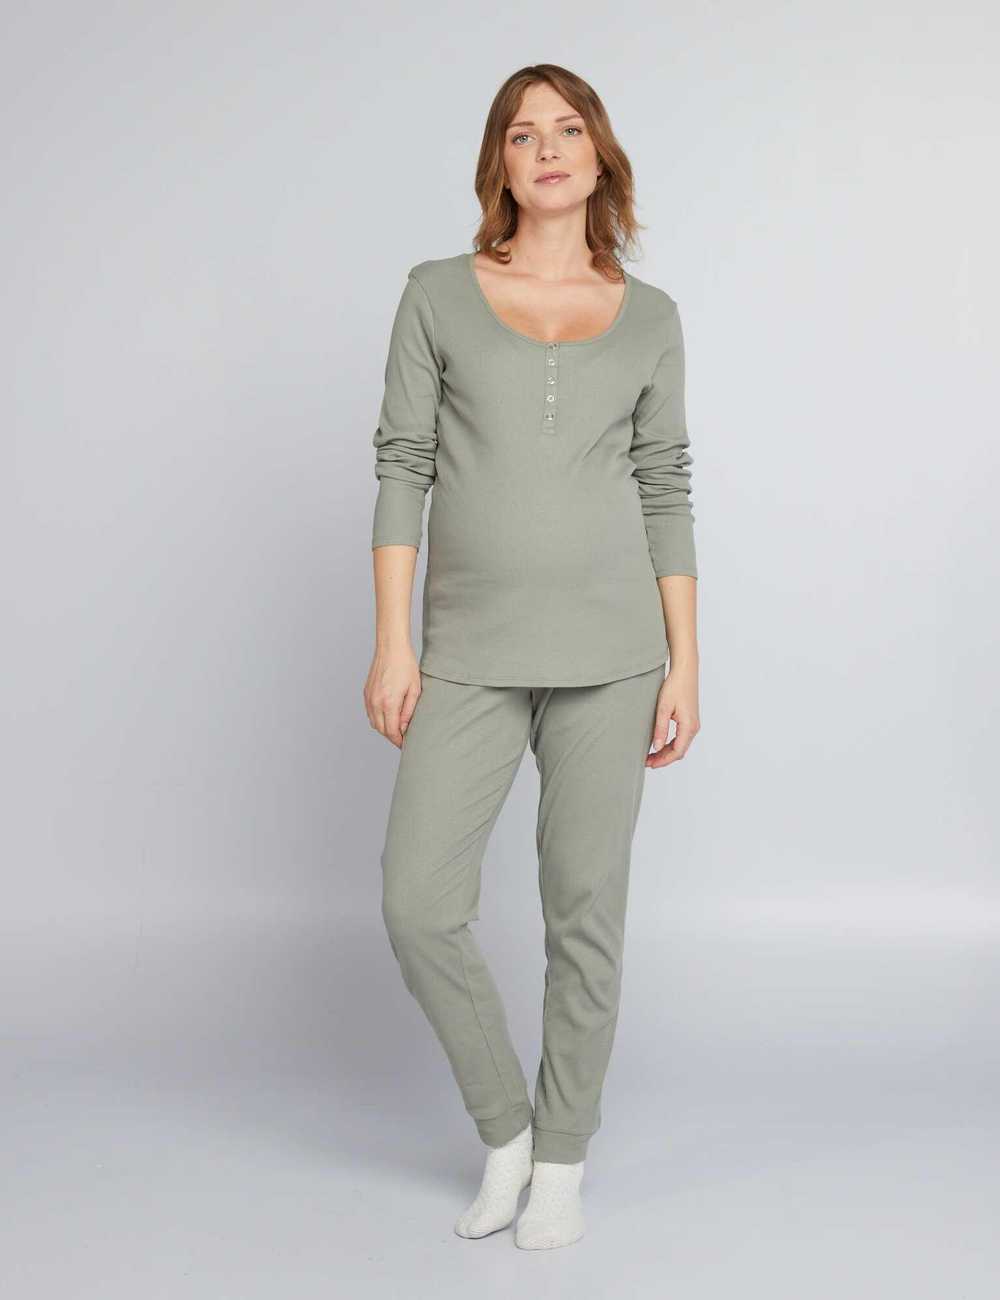 Buy Maternity pyjama set - 2-piece set Online in Dubai & the UAE